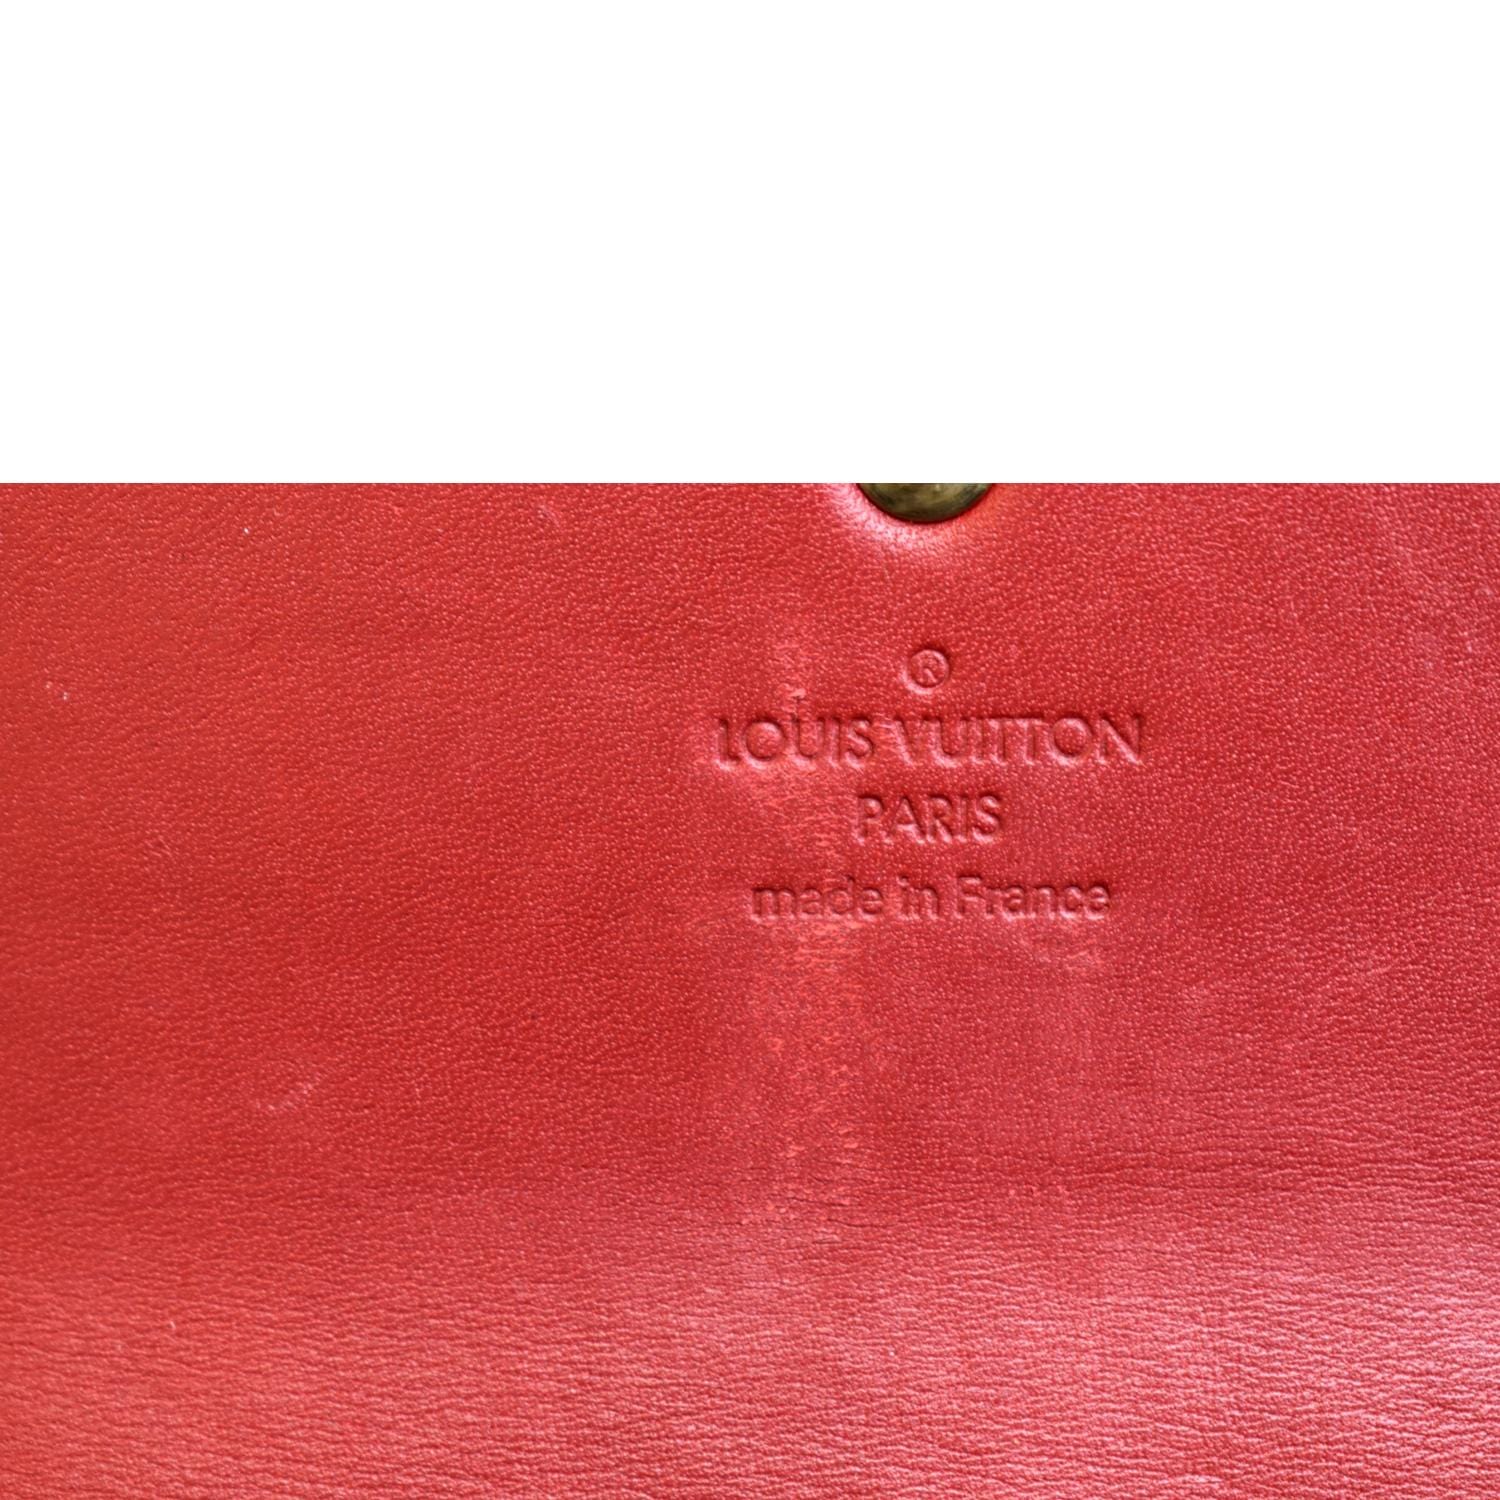 Louis Vuitton Wallet Sarah Monogram Vernis Nm Mordore